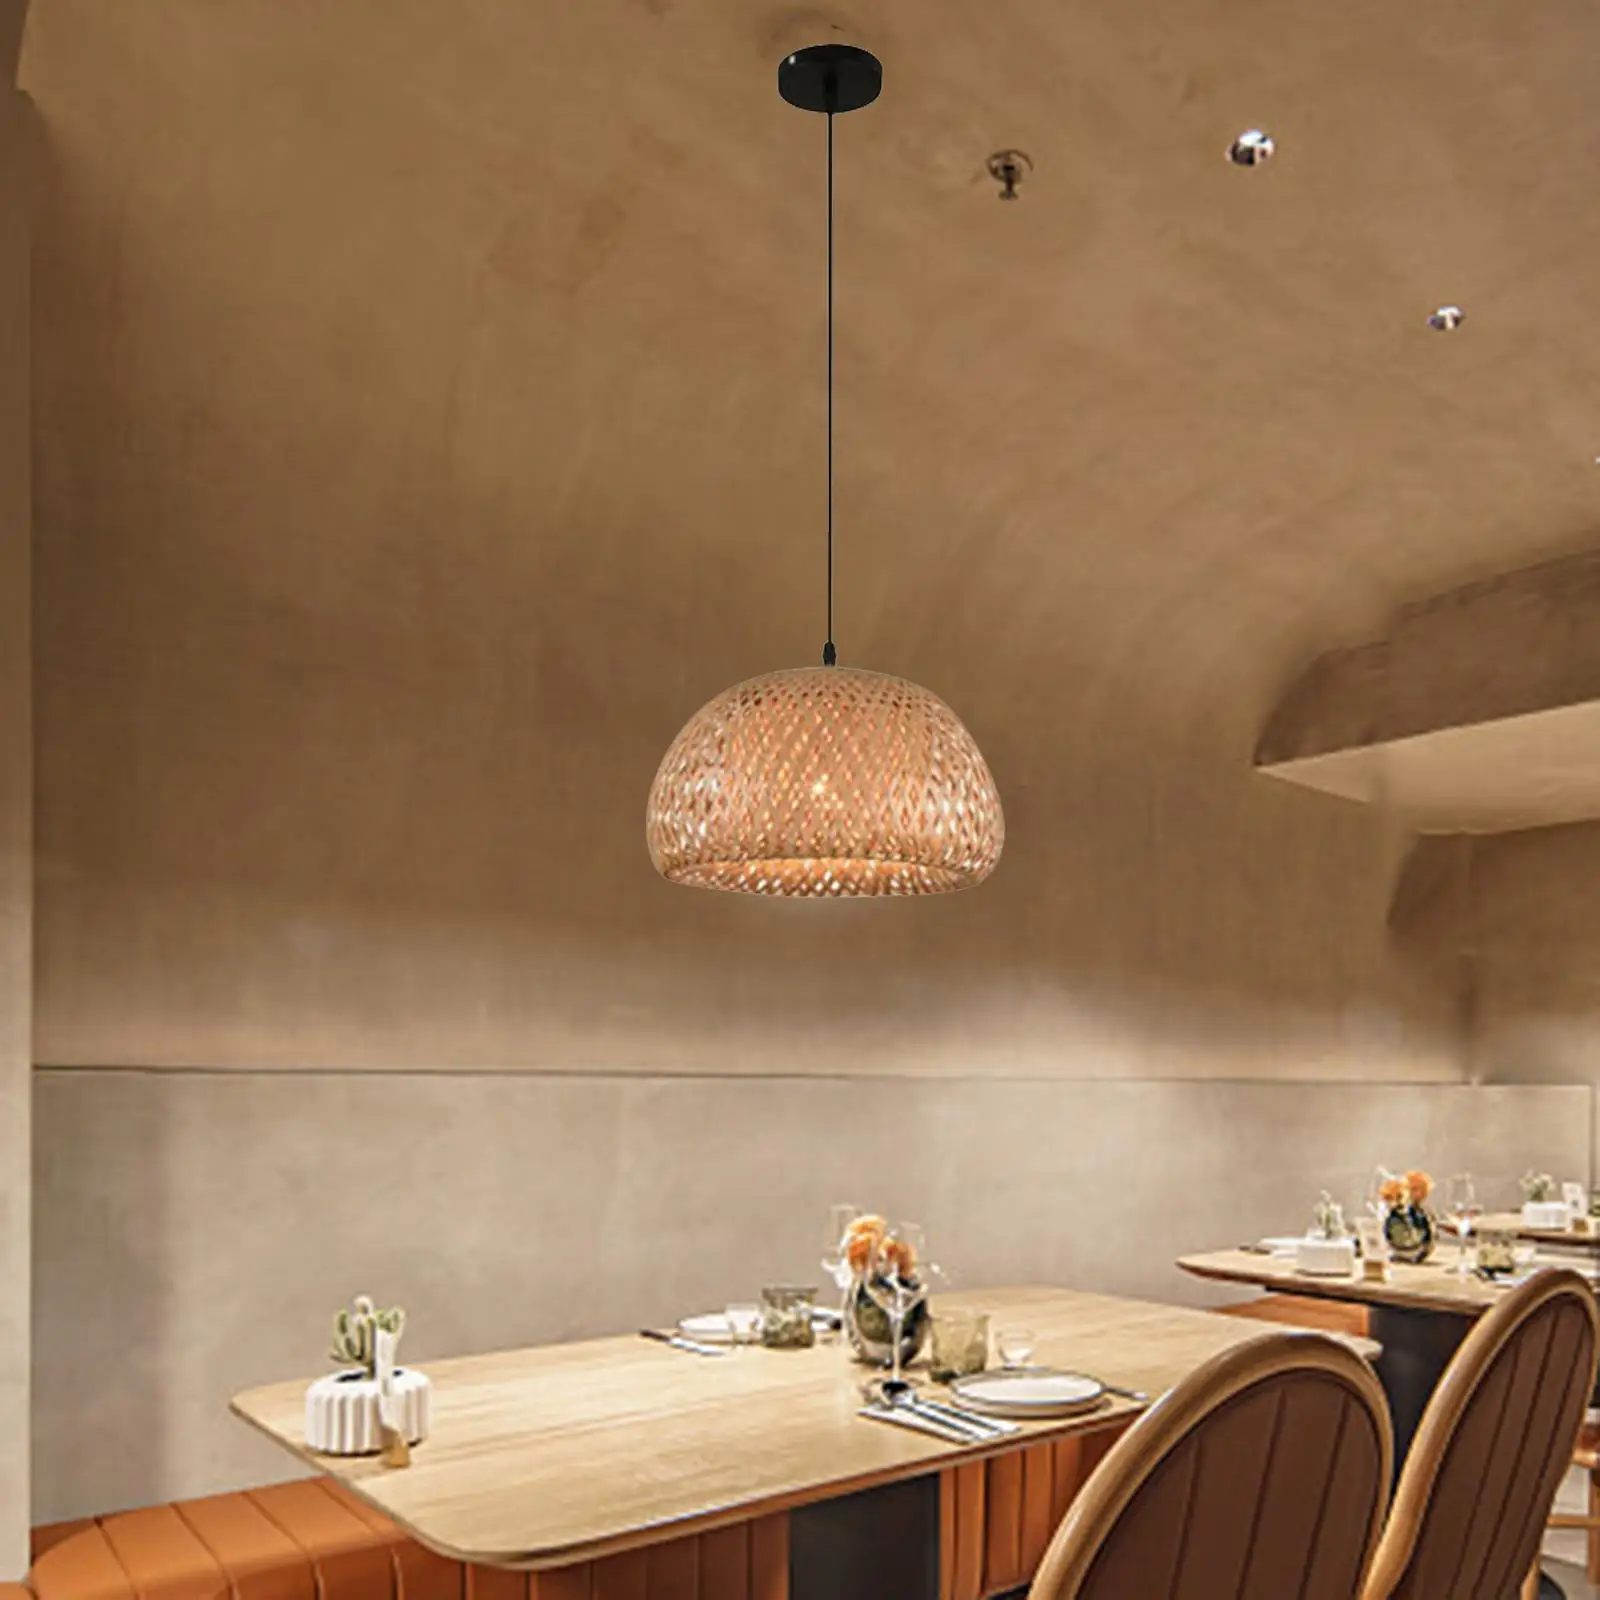 Rattan Lamp Shade Lighting Decorative Retro for Hotel Decor Light Fixture